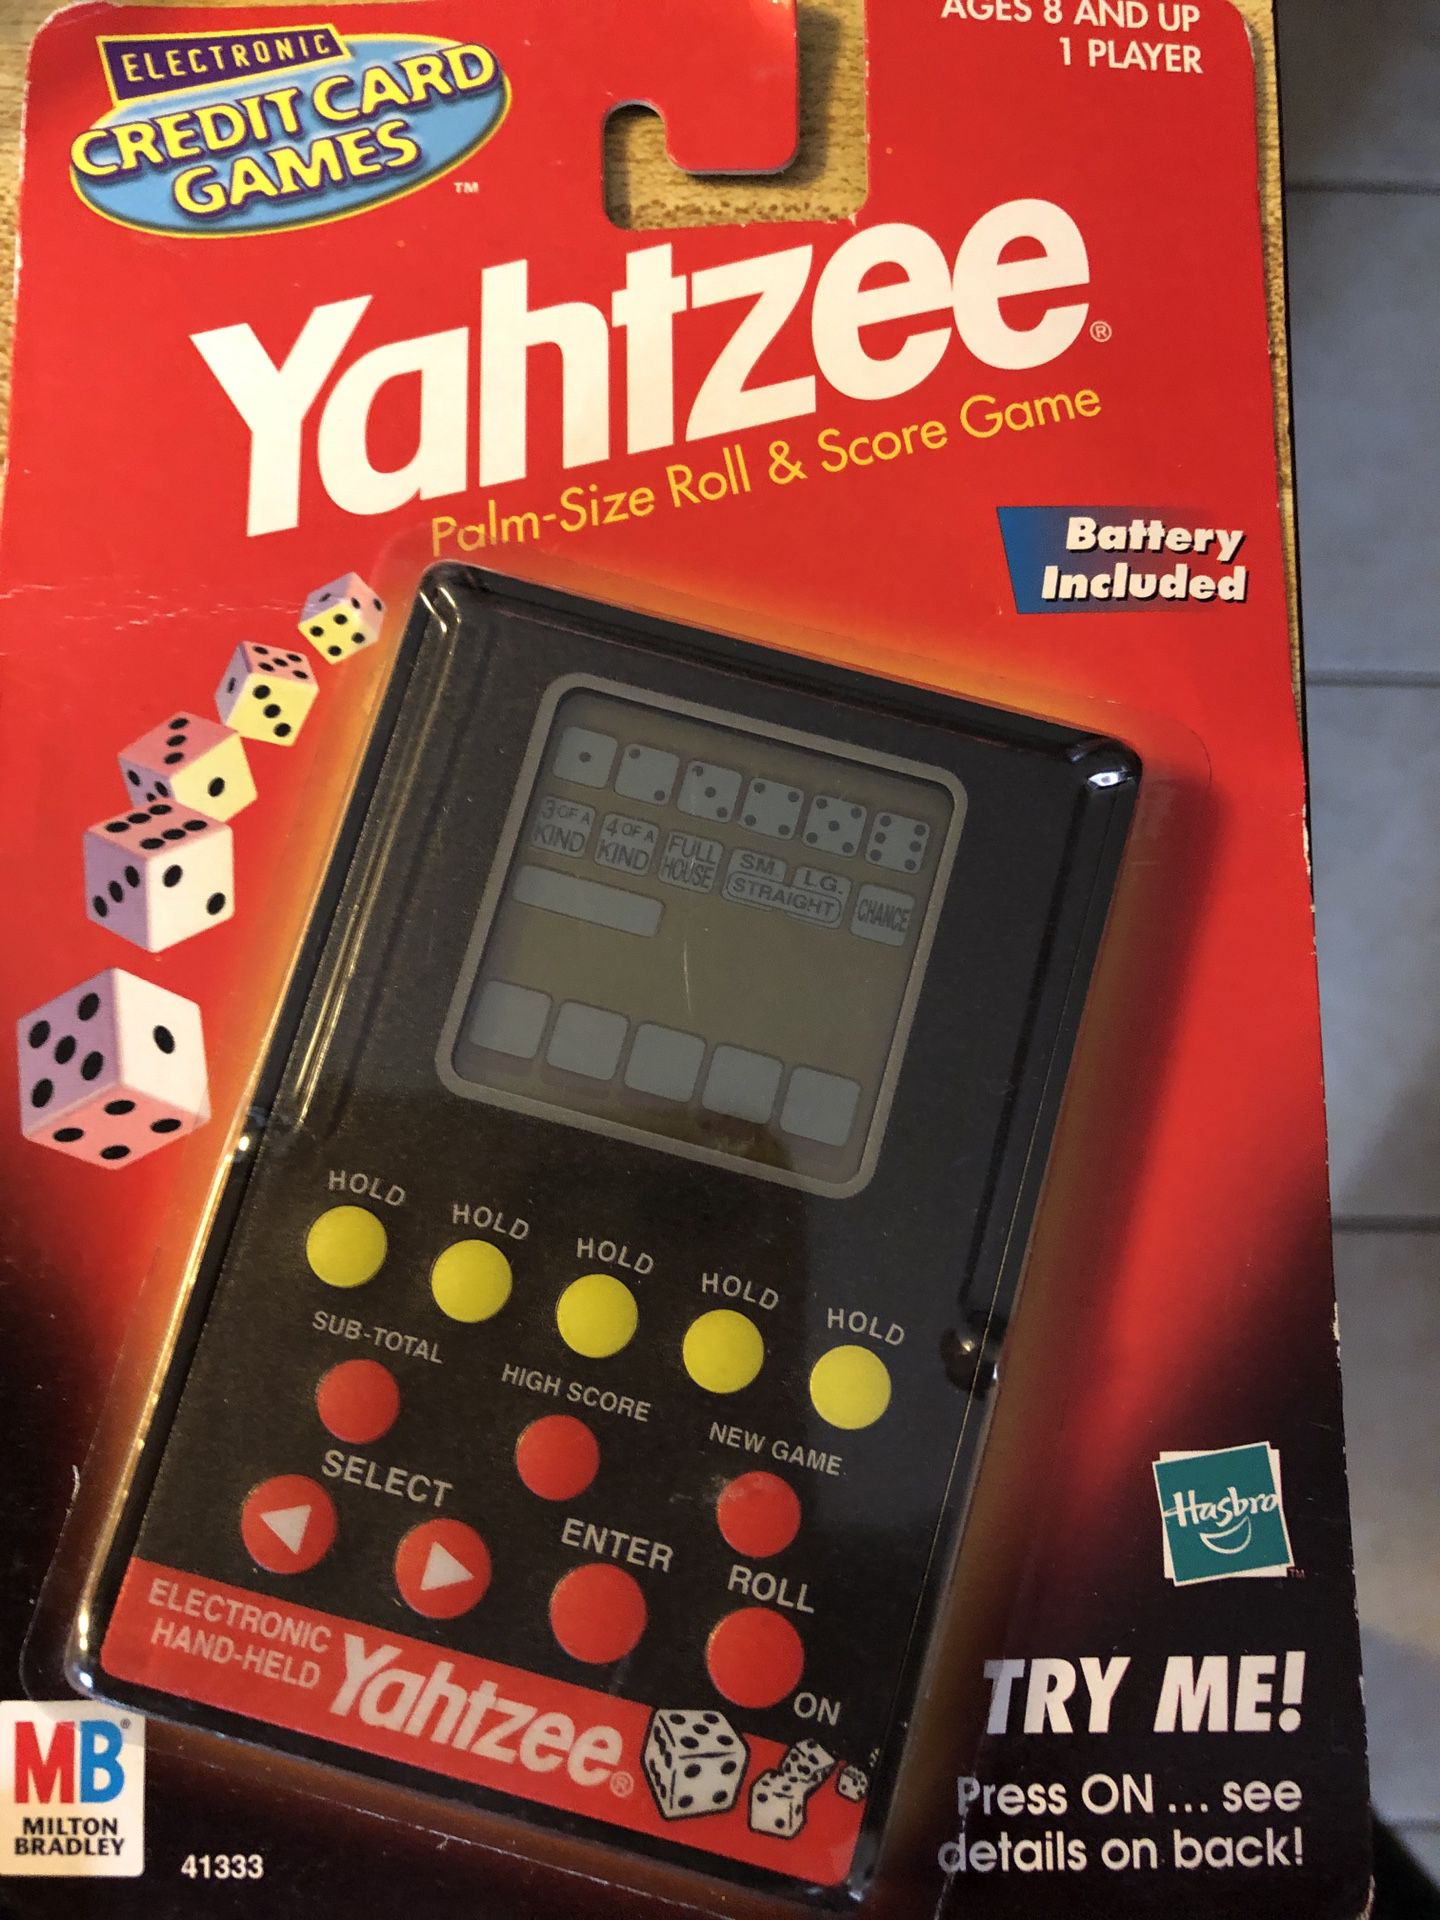 Electronic Yahtzee credit card game